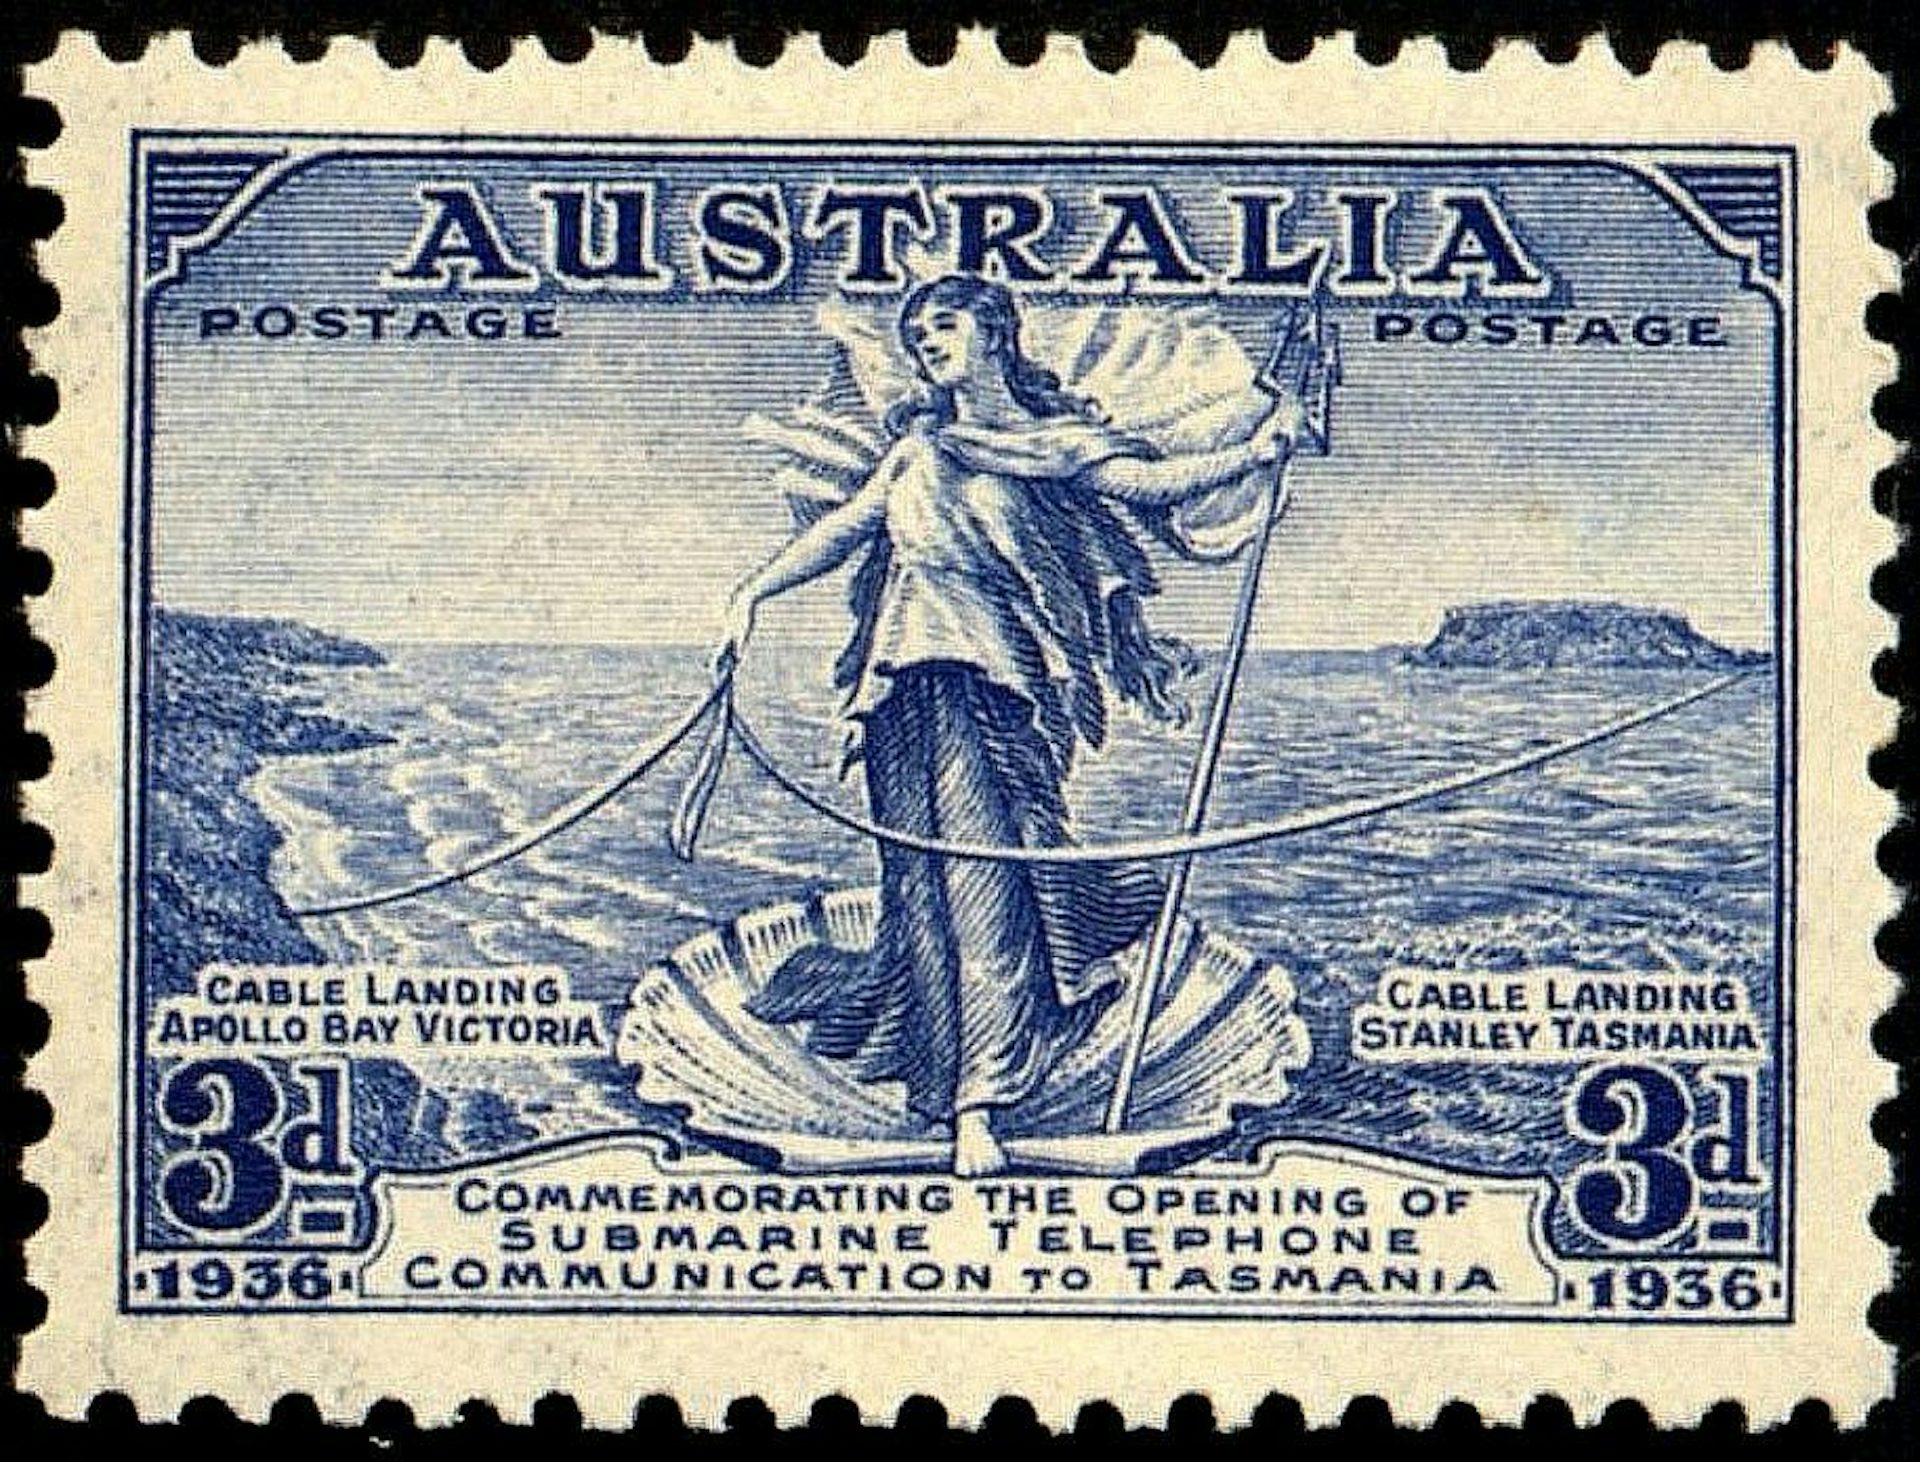 Amphitrite on an Australian postage stamp